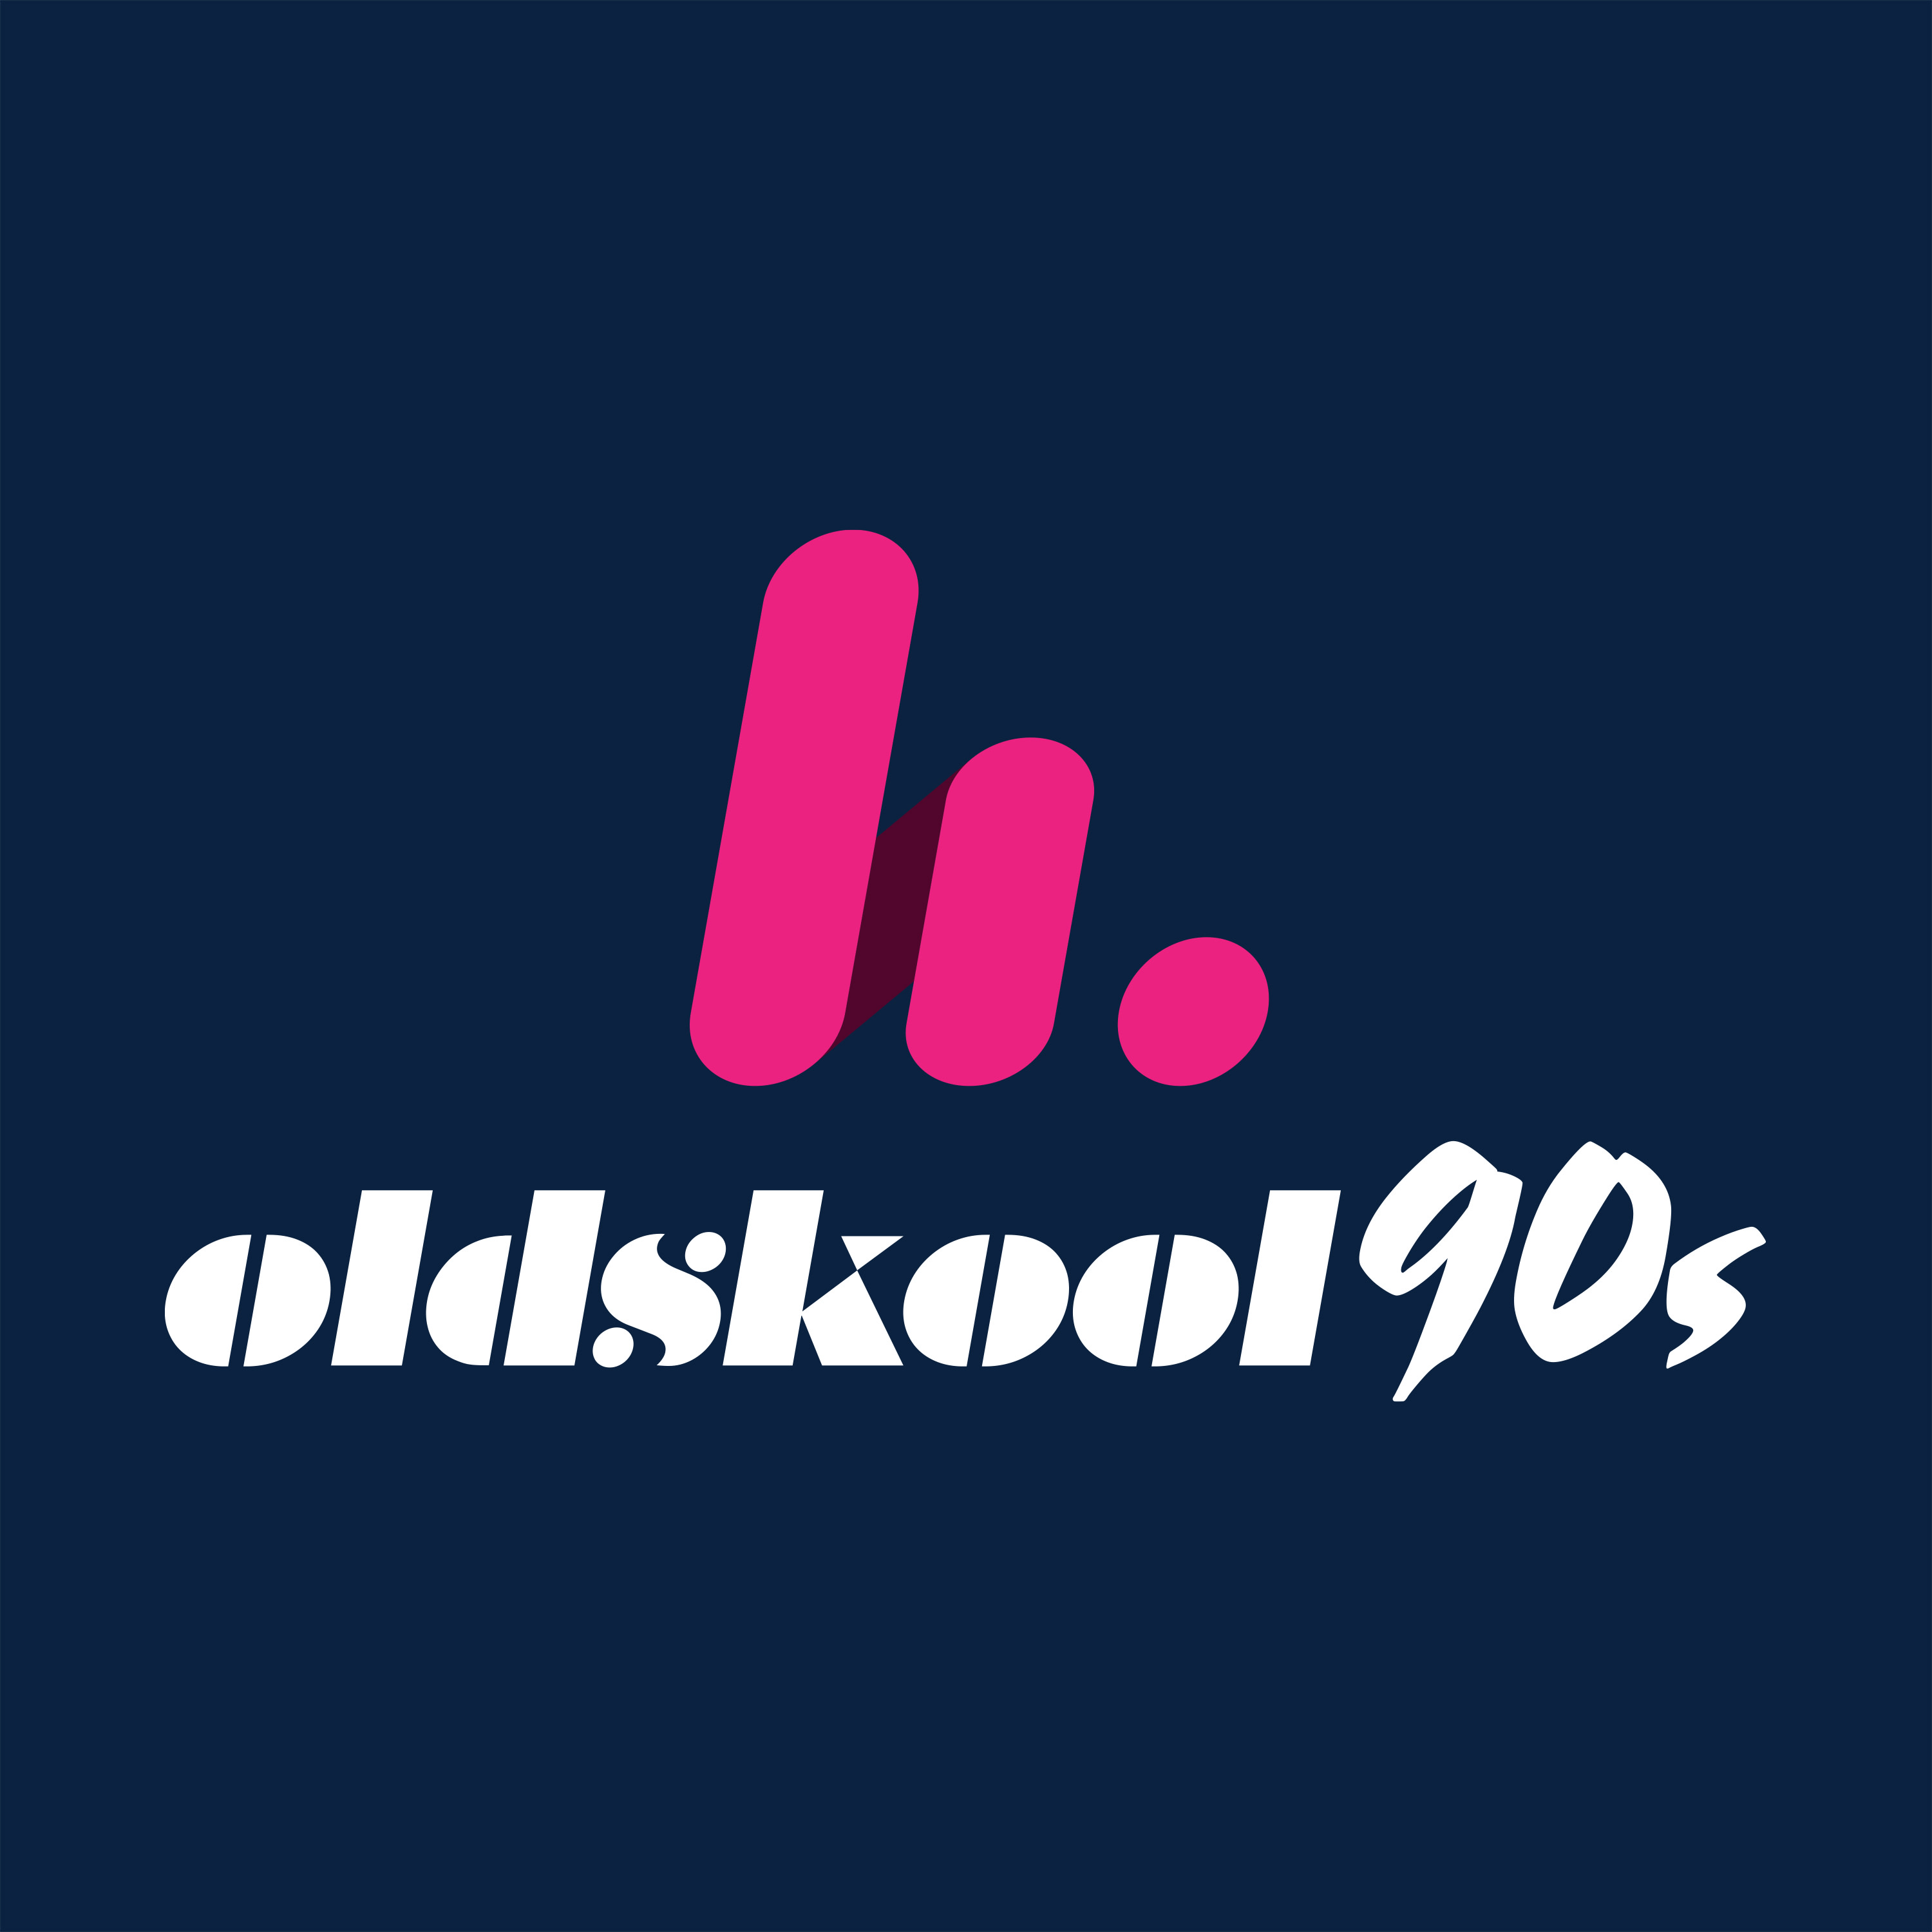 Oldskool 90s Hits logo